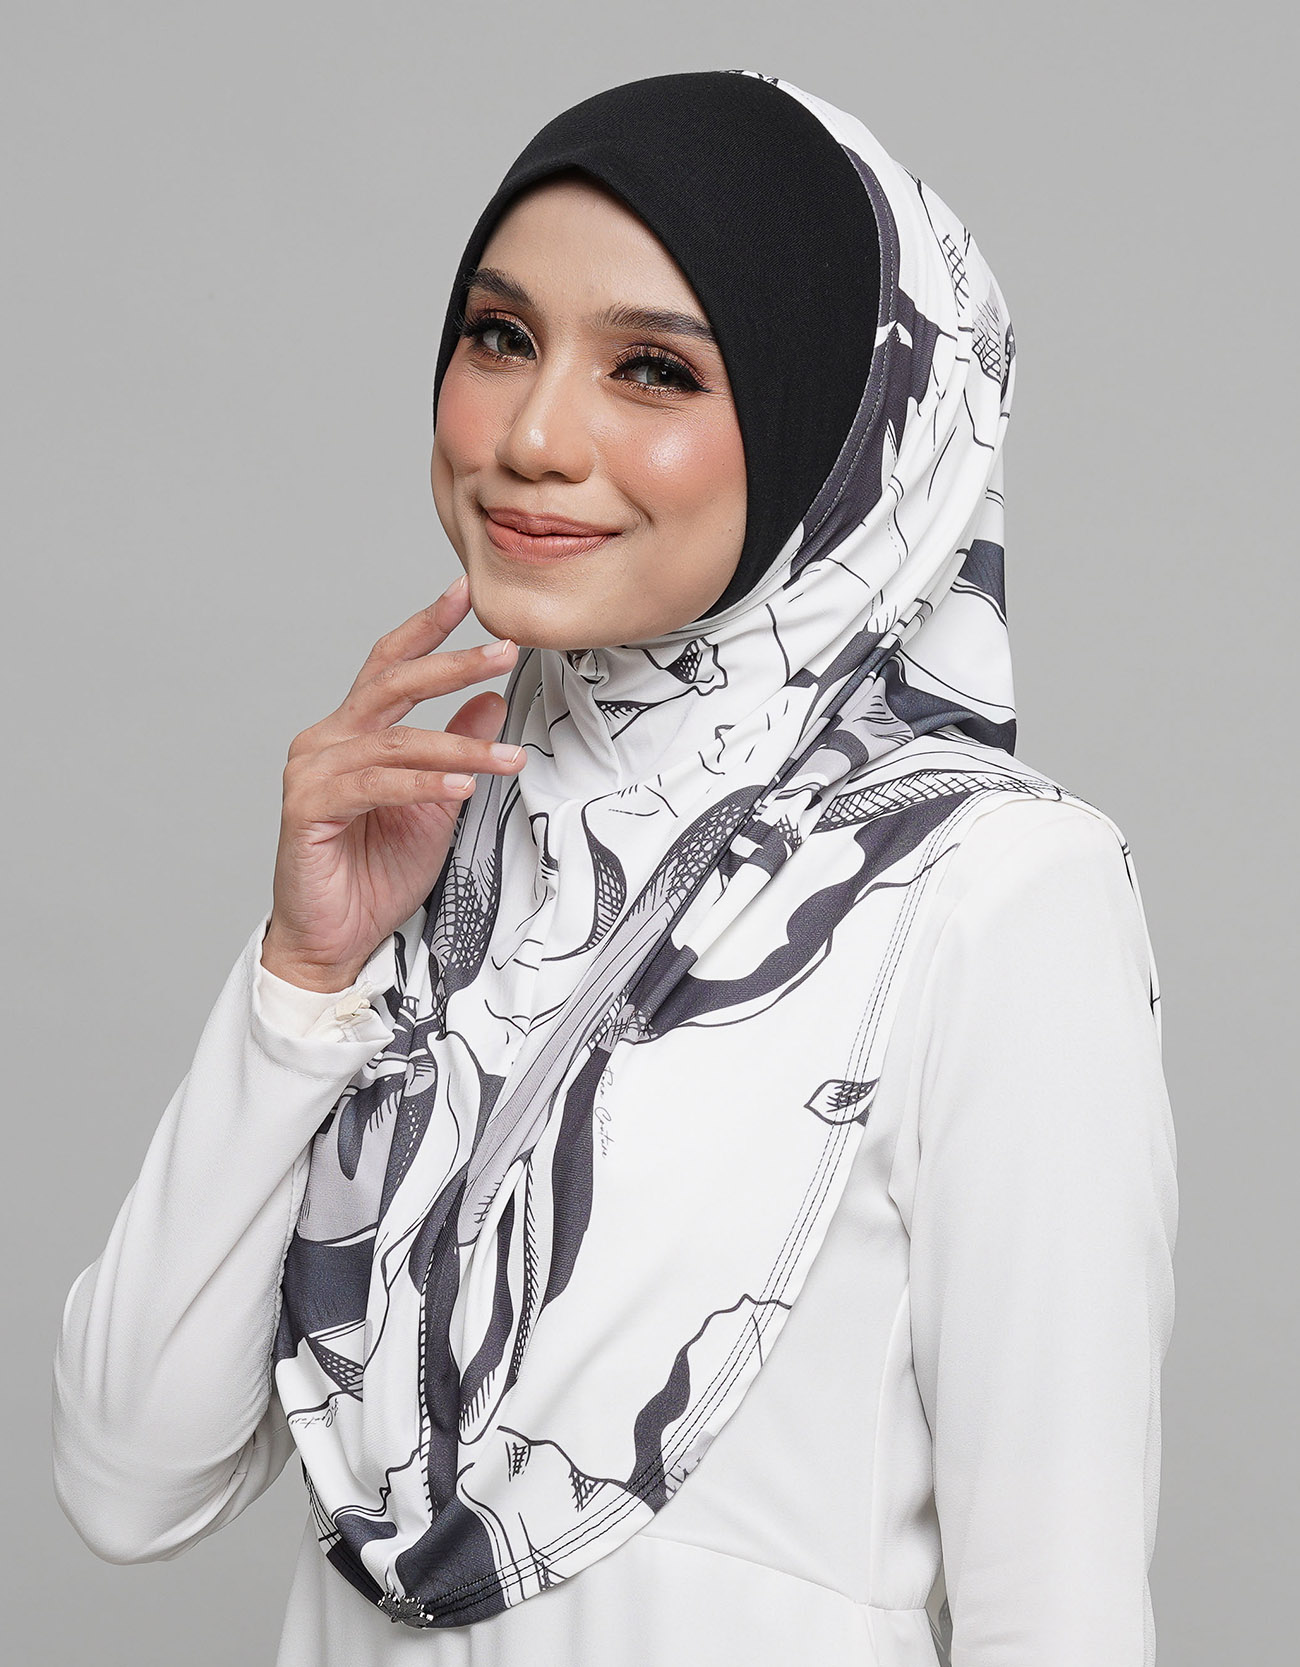 Express Hijab Damia Signature 04 - Black Edition